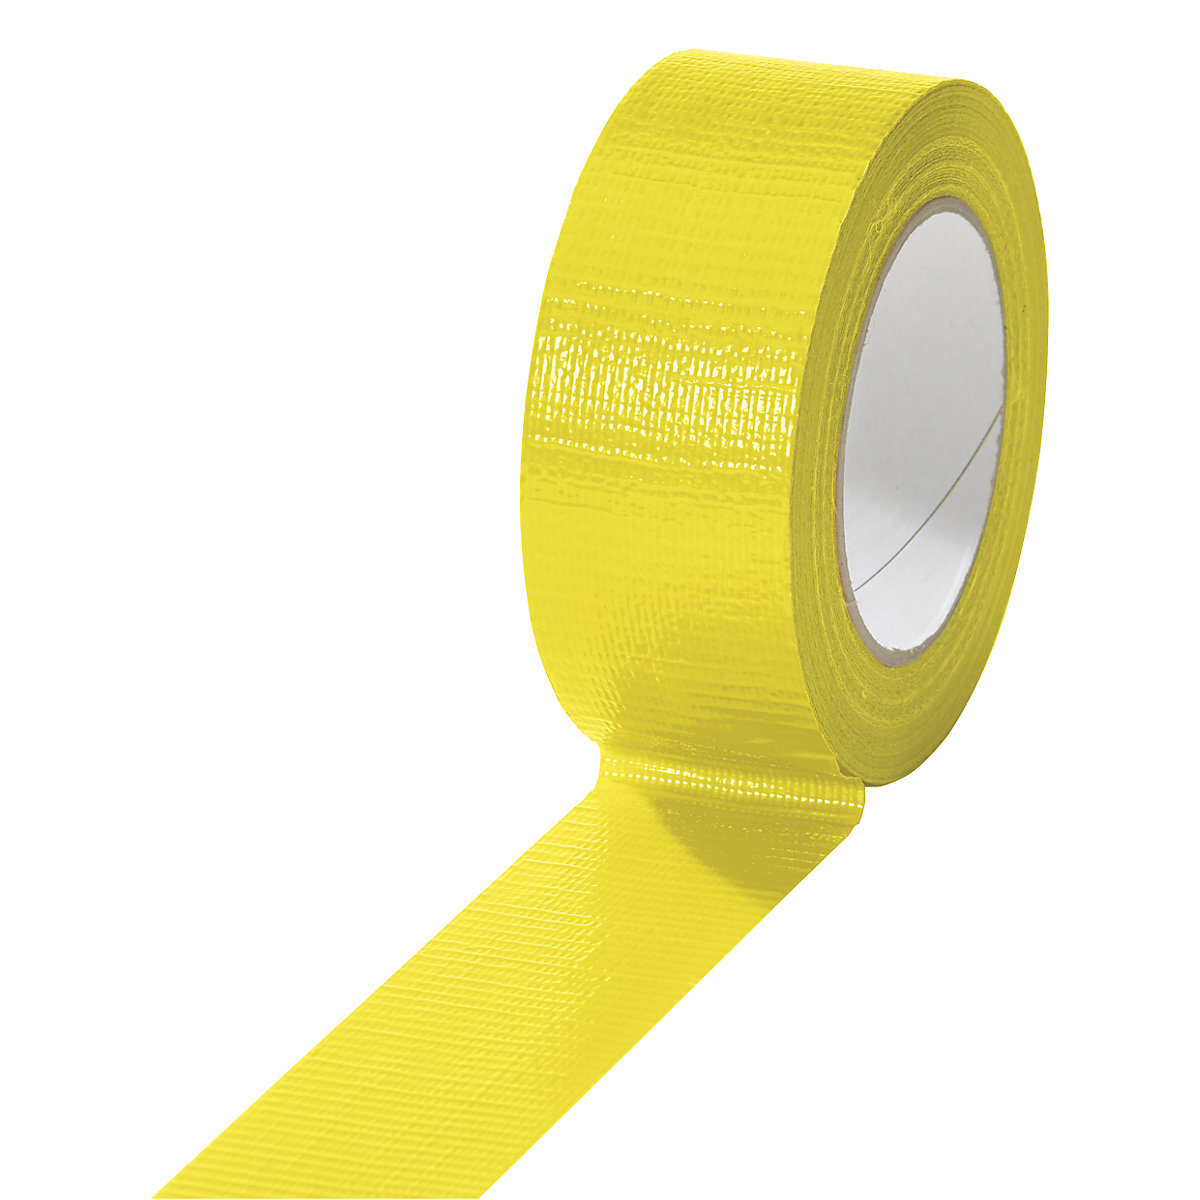 Tkaninová páska, v různých barvách, bal.j. 24 rolí, žlutá, šířka pásky 38 mm-4